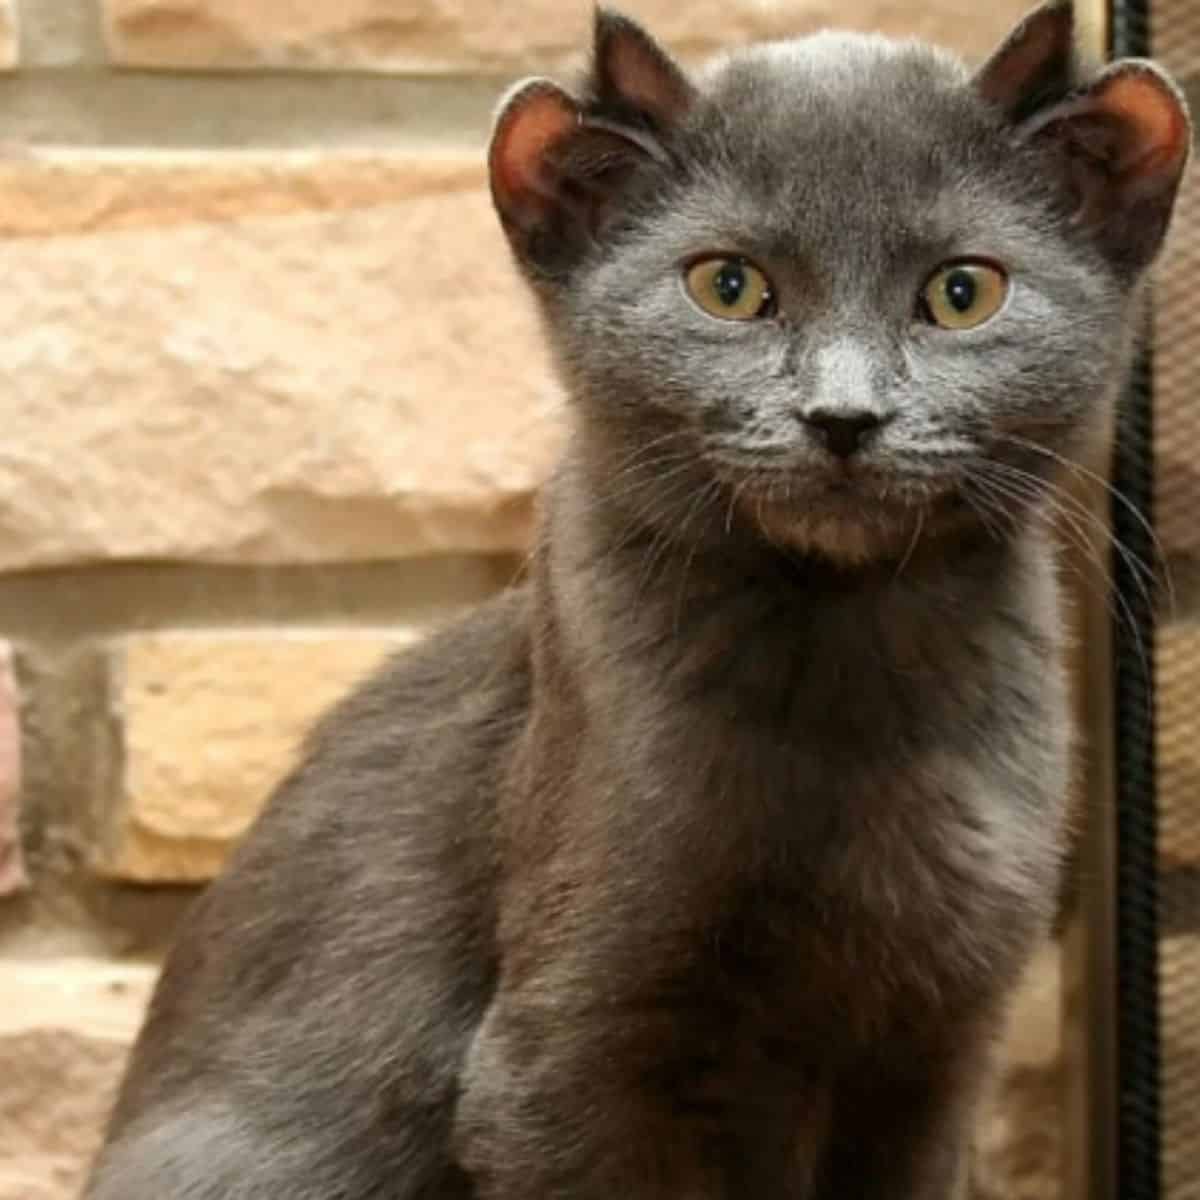 yoda, a cat with four ears